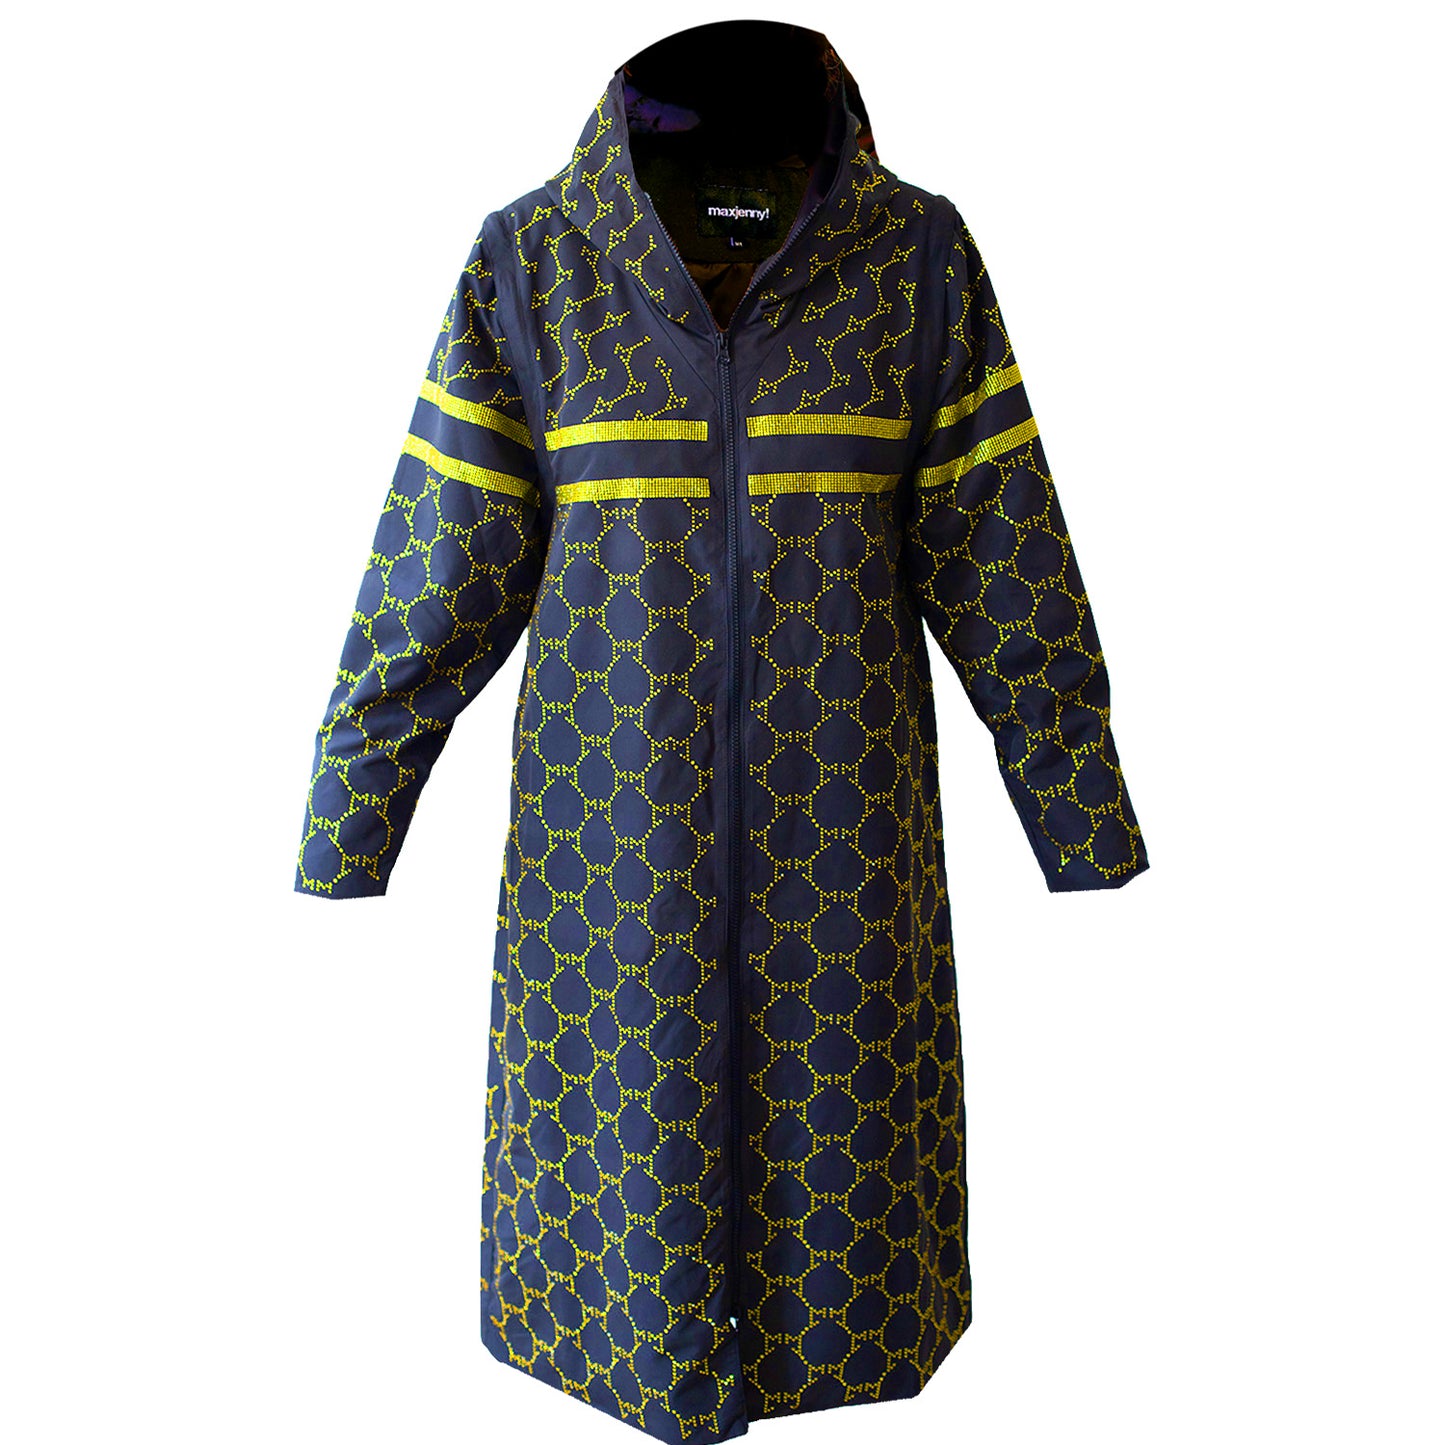 SALE Swarovski gold raincoat/vest